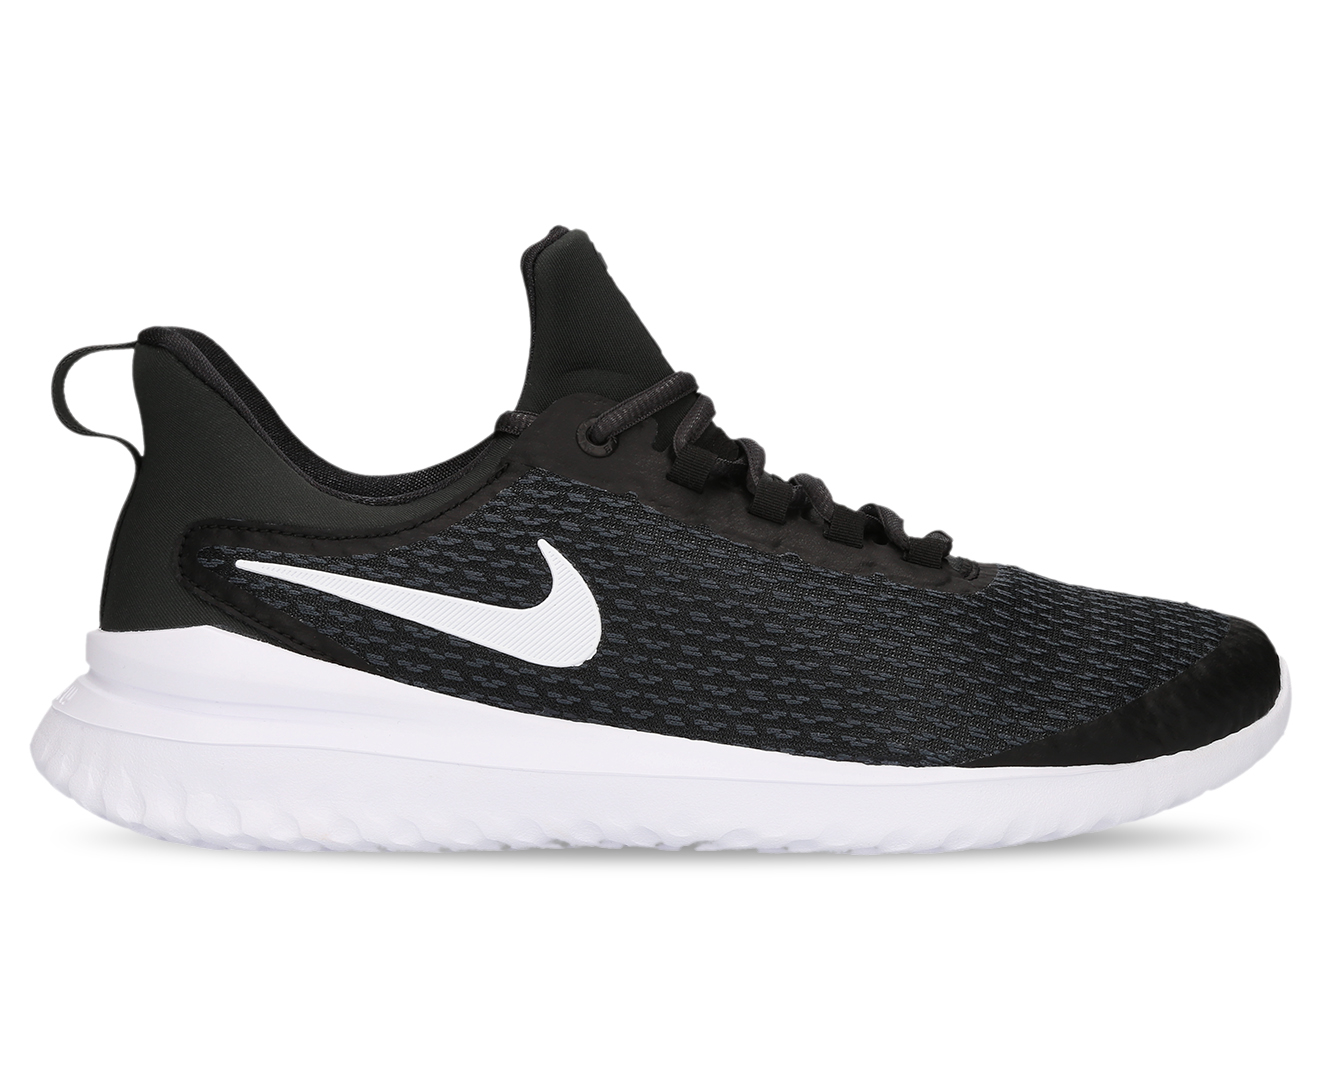 Nike Men's Renew Rival Shoe - Black/White-Anthracite | Catch.co.nz